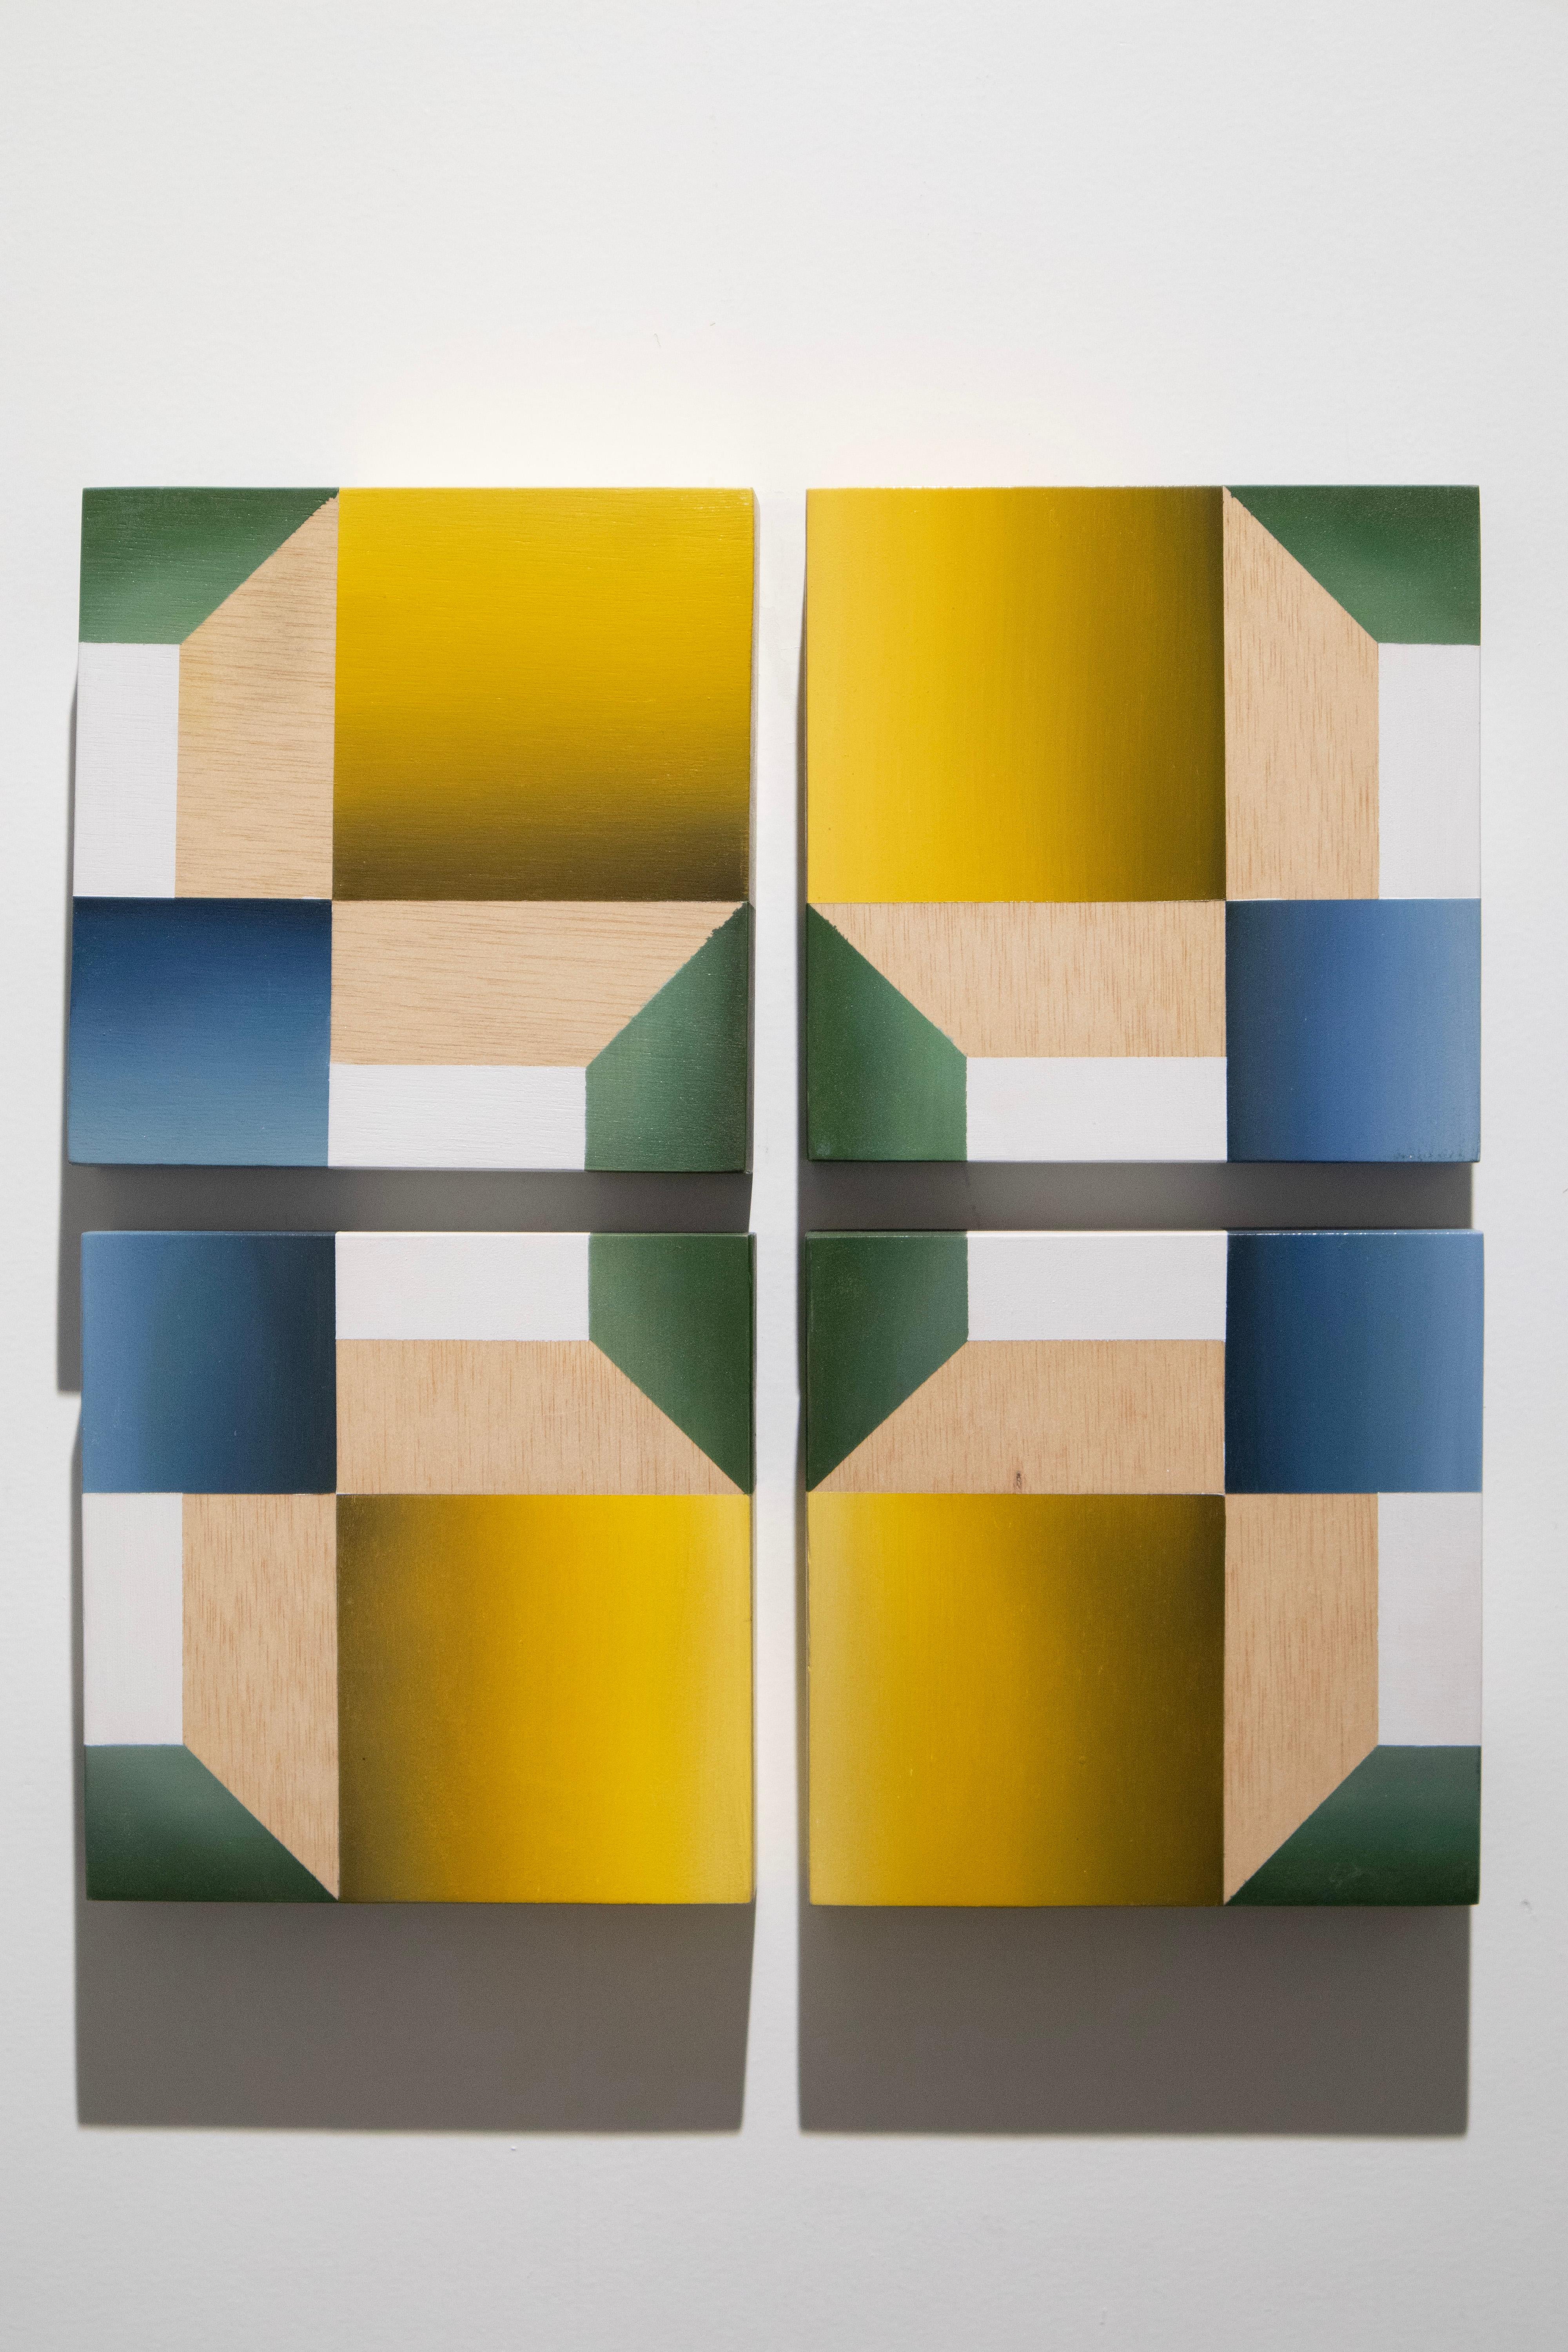 Geometric-Kaleidoscopic 1 - 21st Century, Oil painting, Geometric Abstraction - Painting by Víctor Pérez-Porro